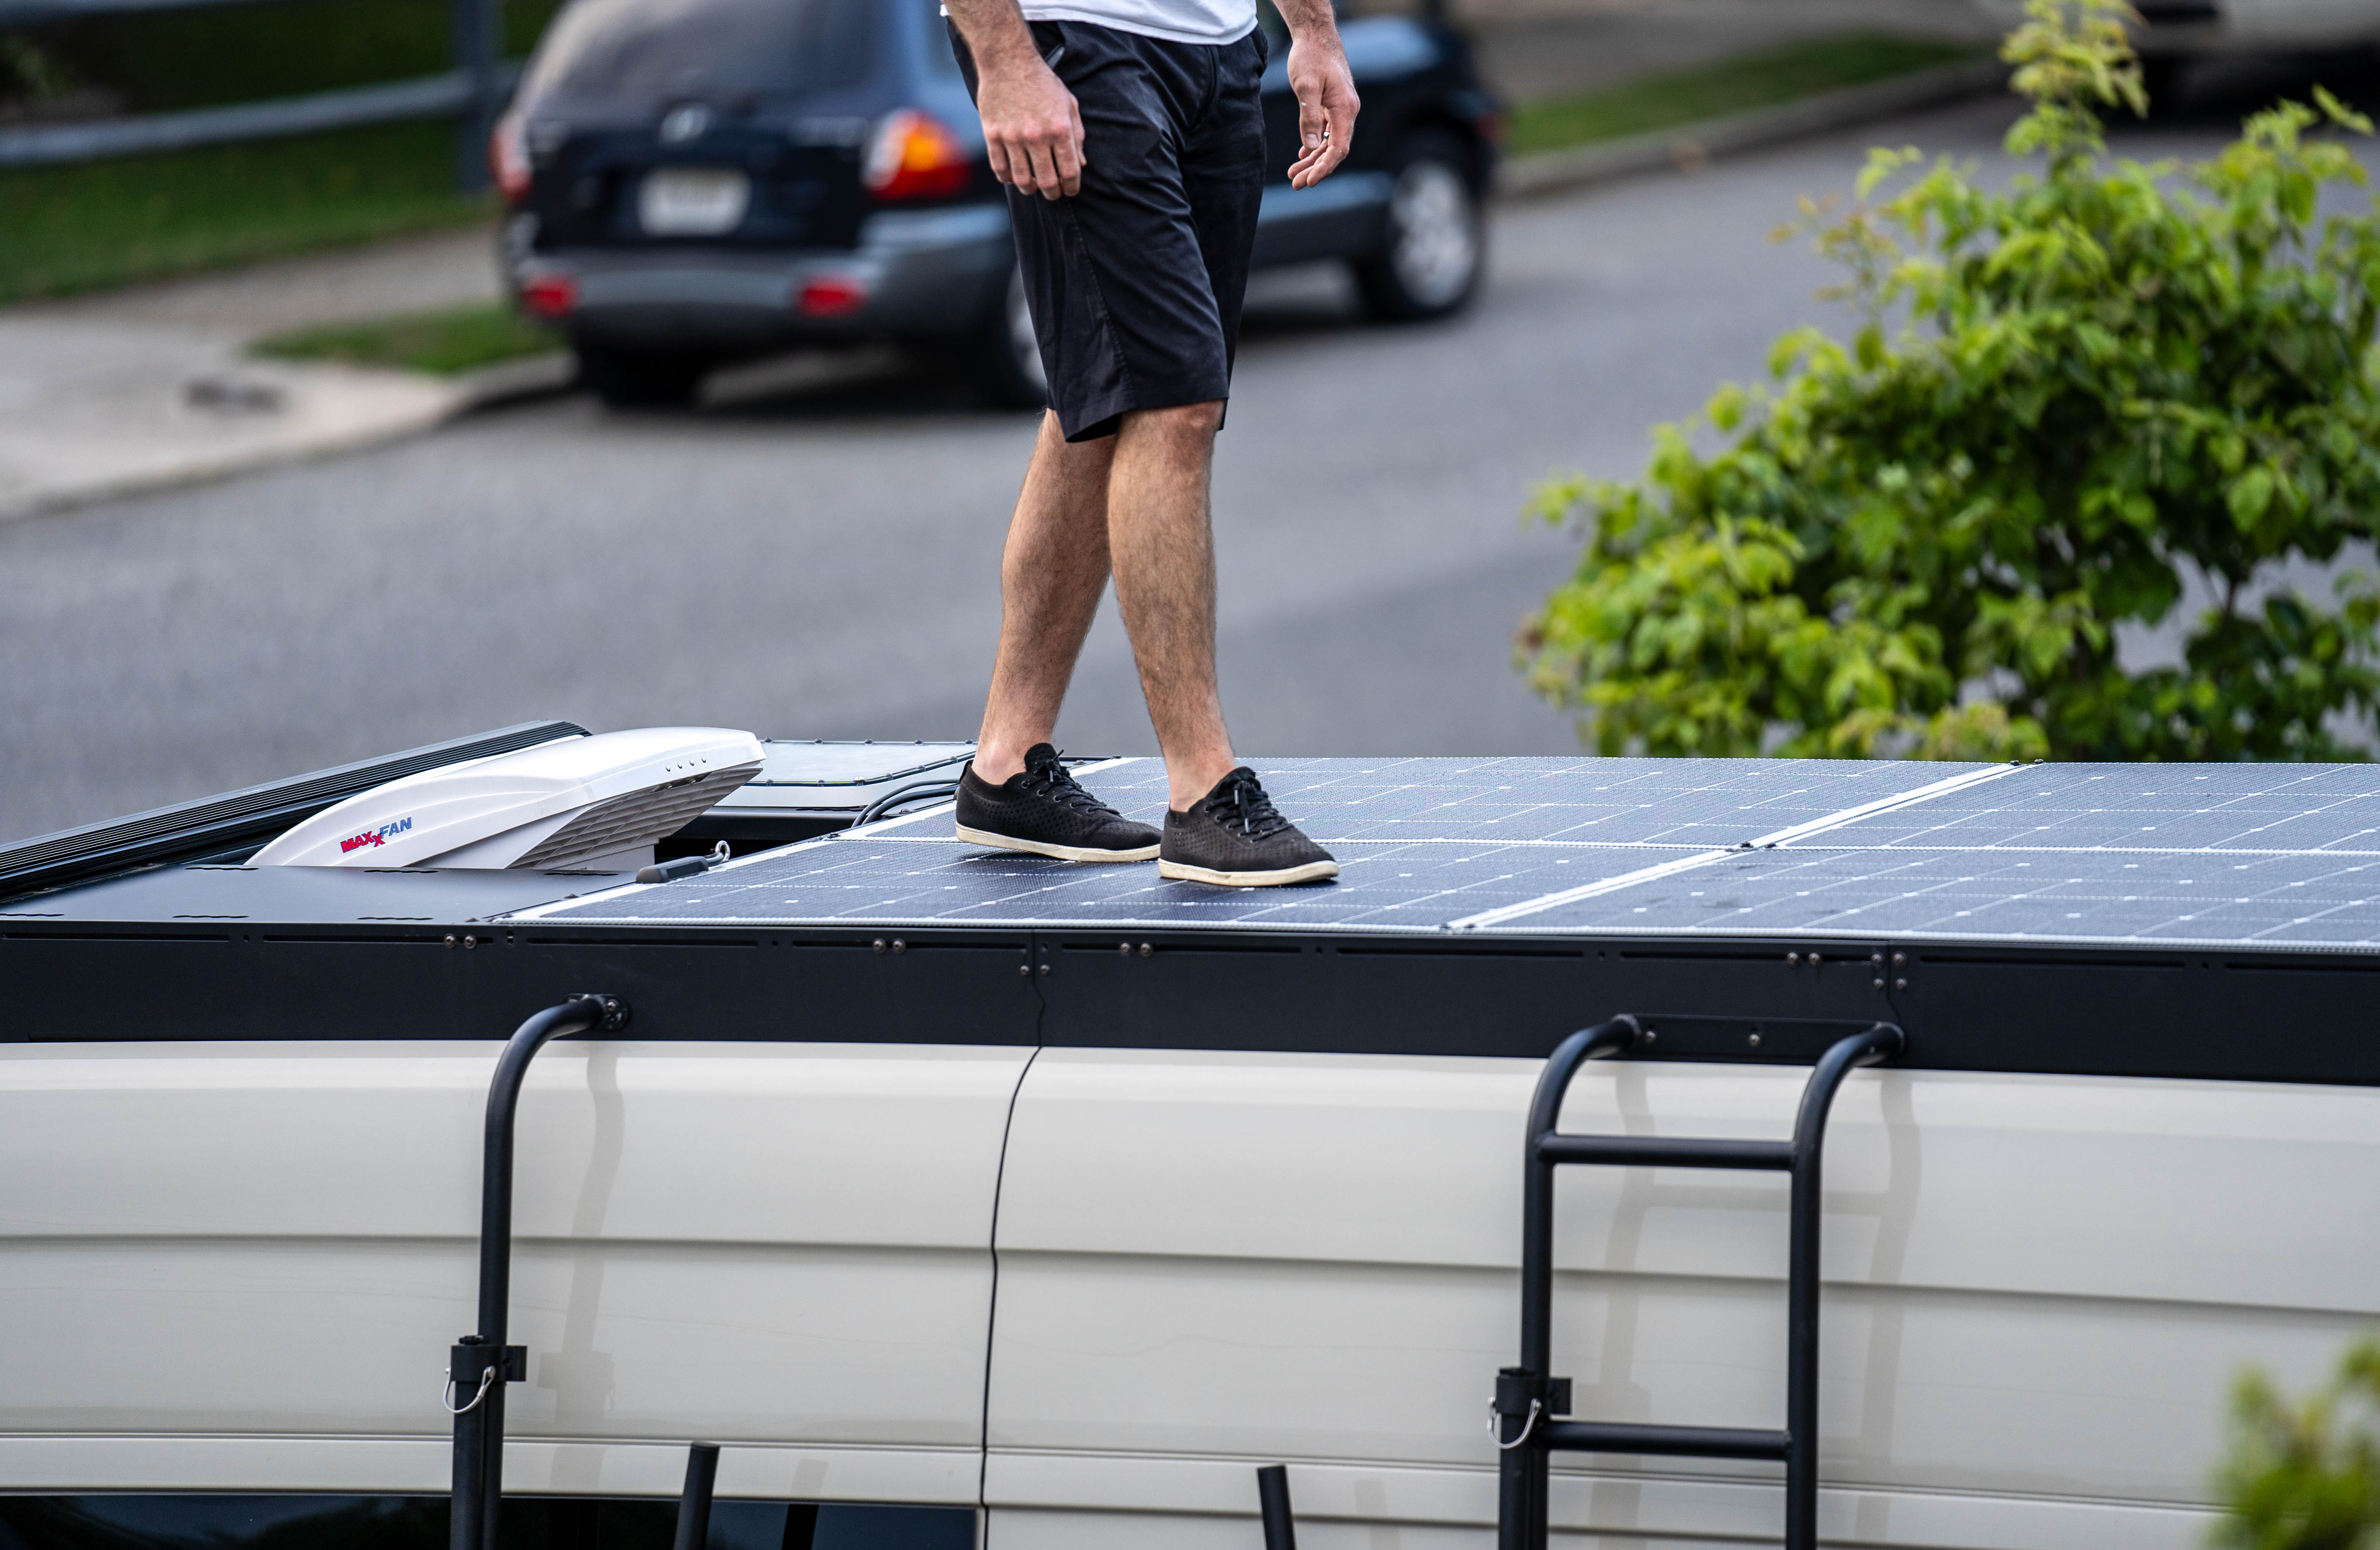 Man walks on solar panels on orion roof rack